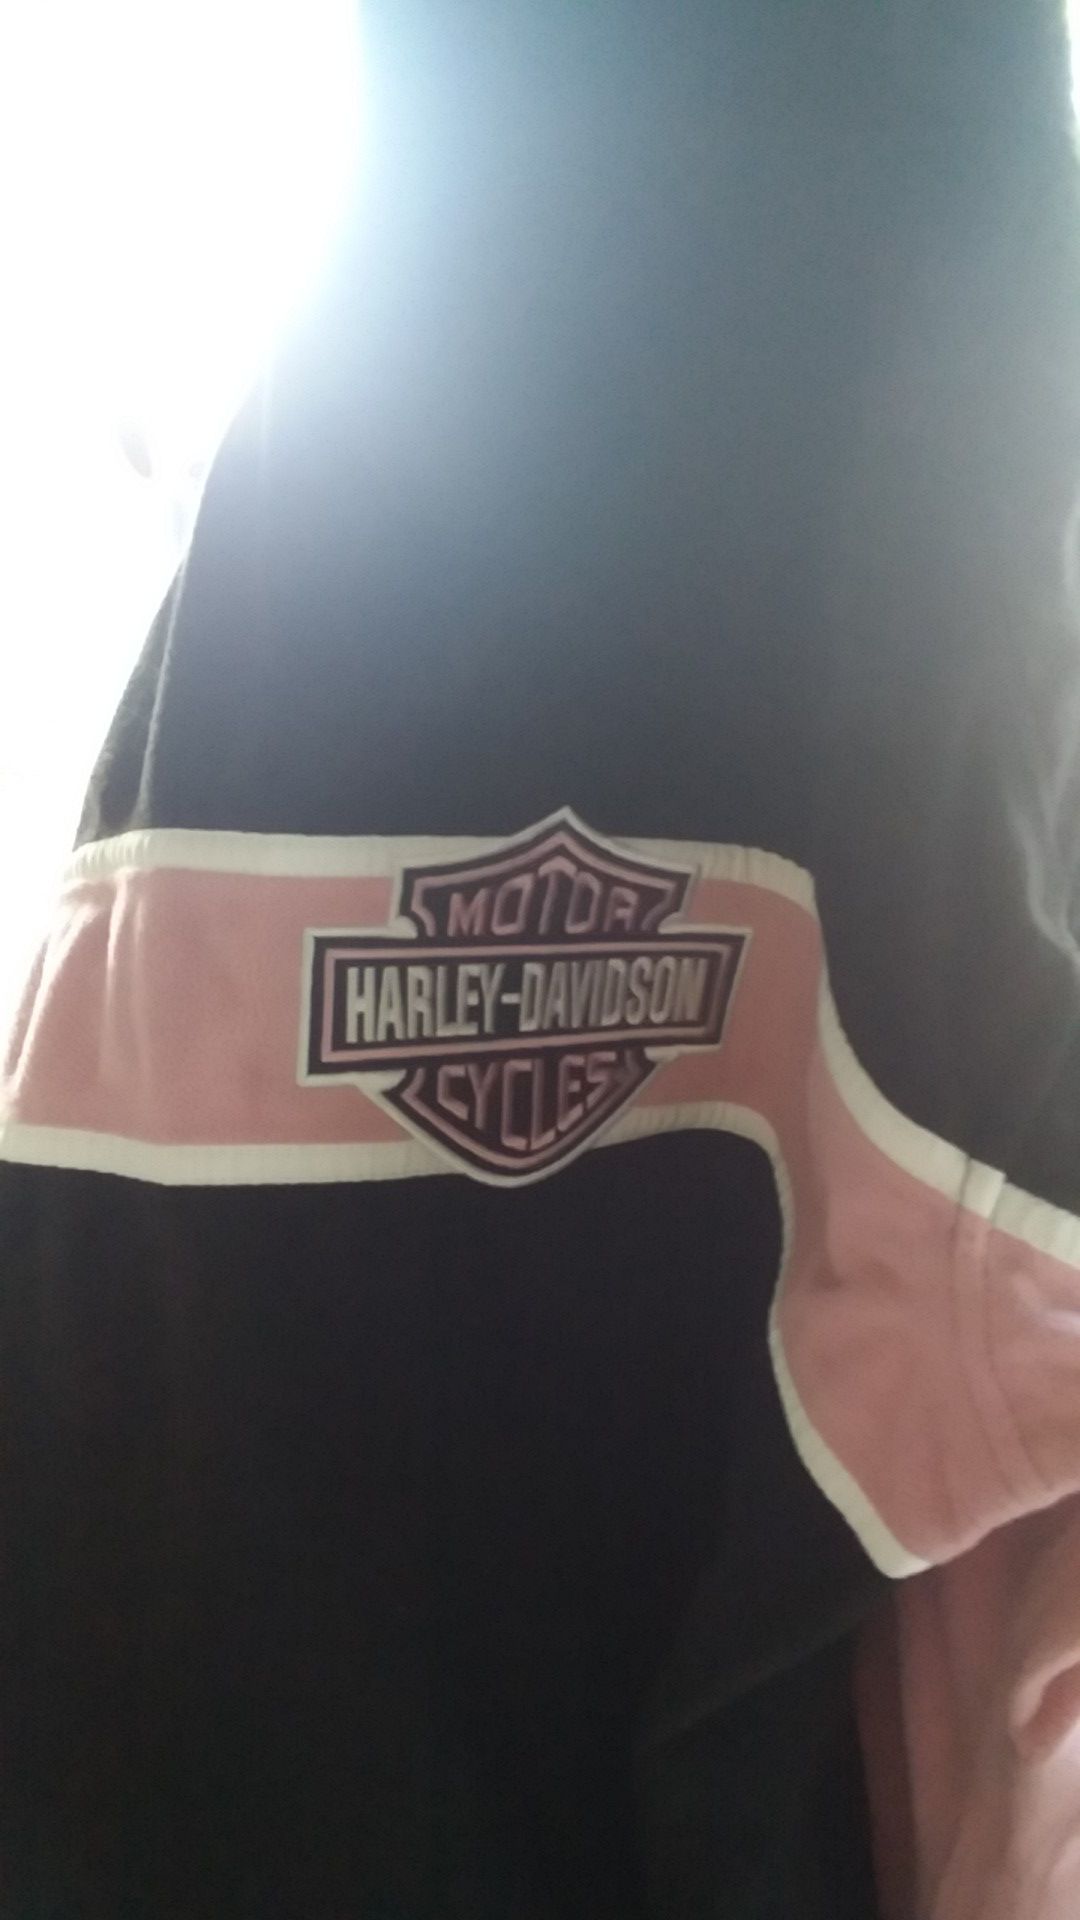 Harley Davidson Large jacket hoodie with pink stripe